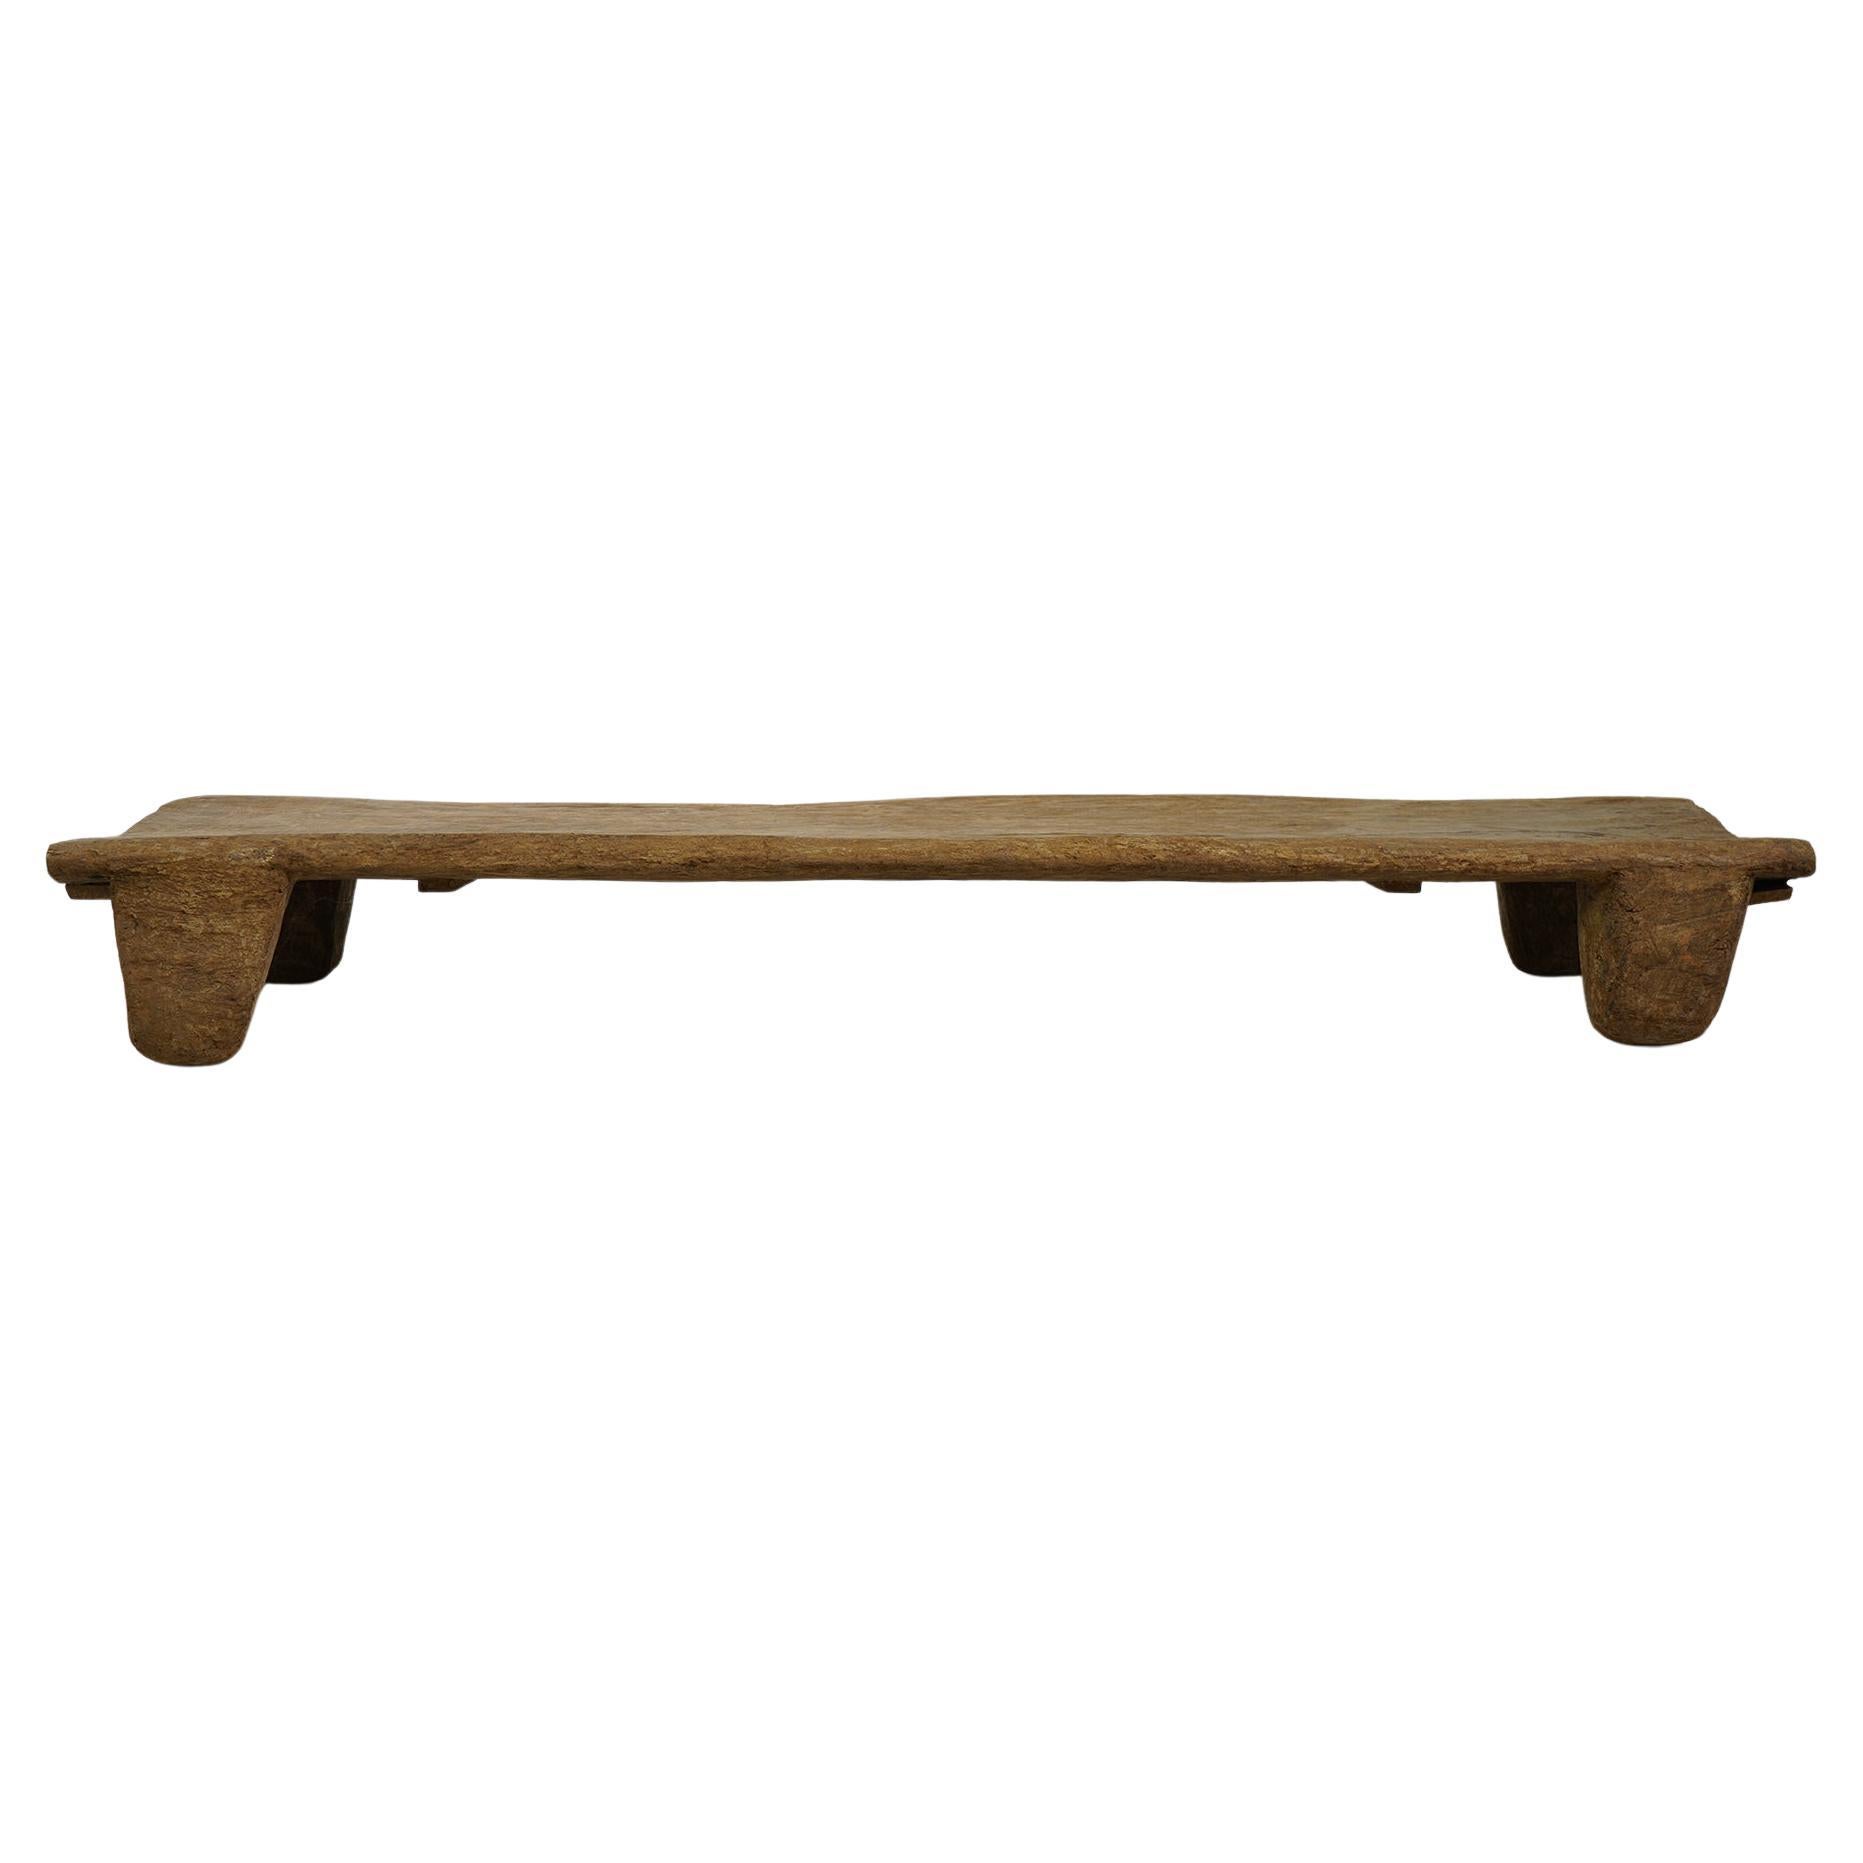 Rustic Naga Table or Bench, Hand Carved Wabi Sabi Style, Ancient Wood 'B'